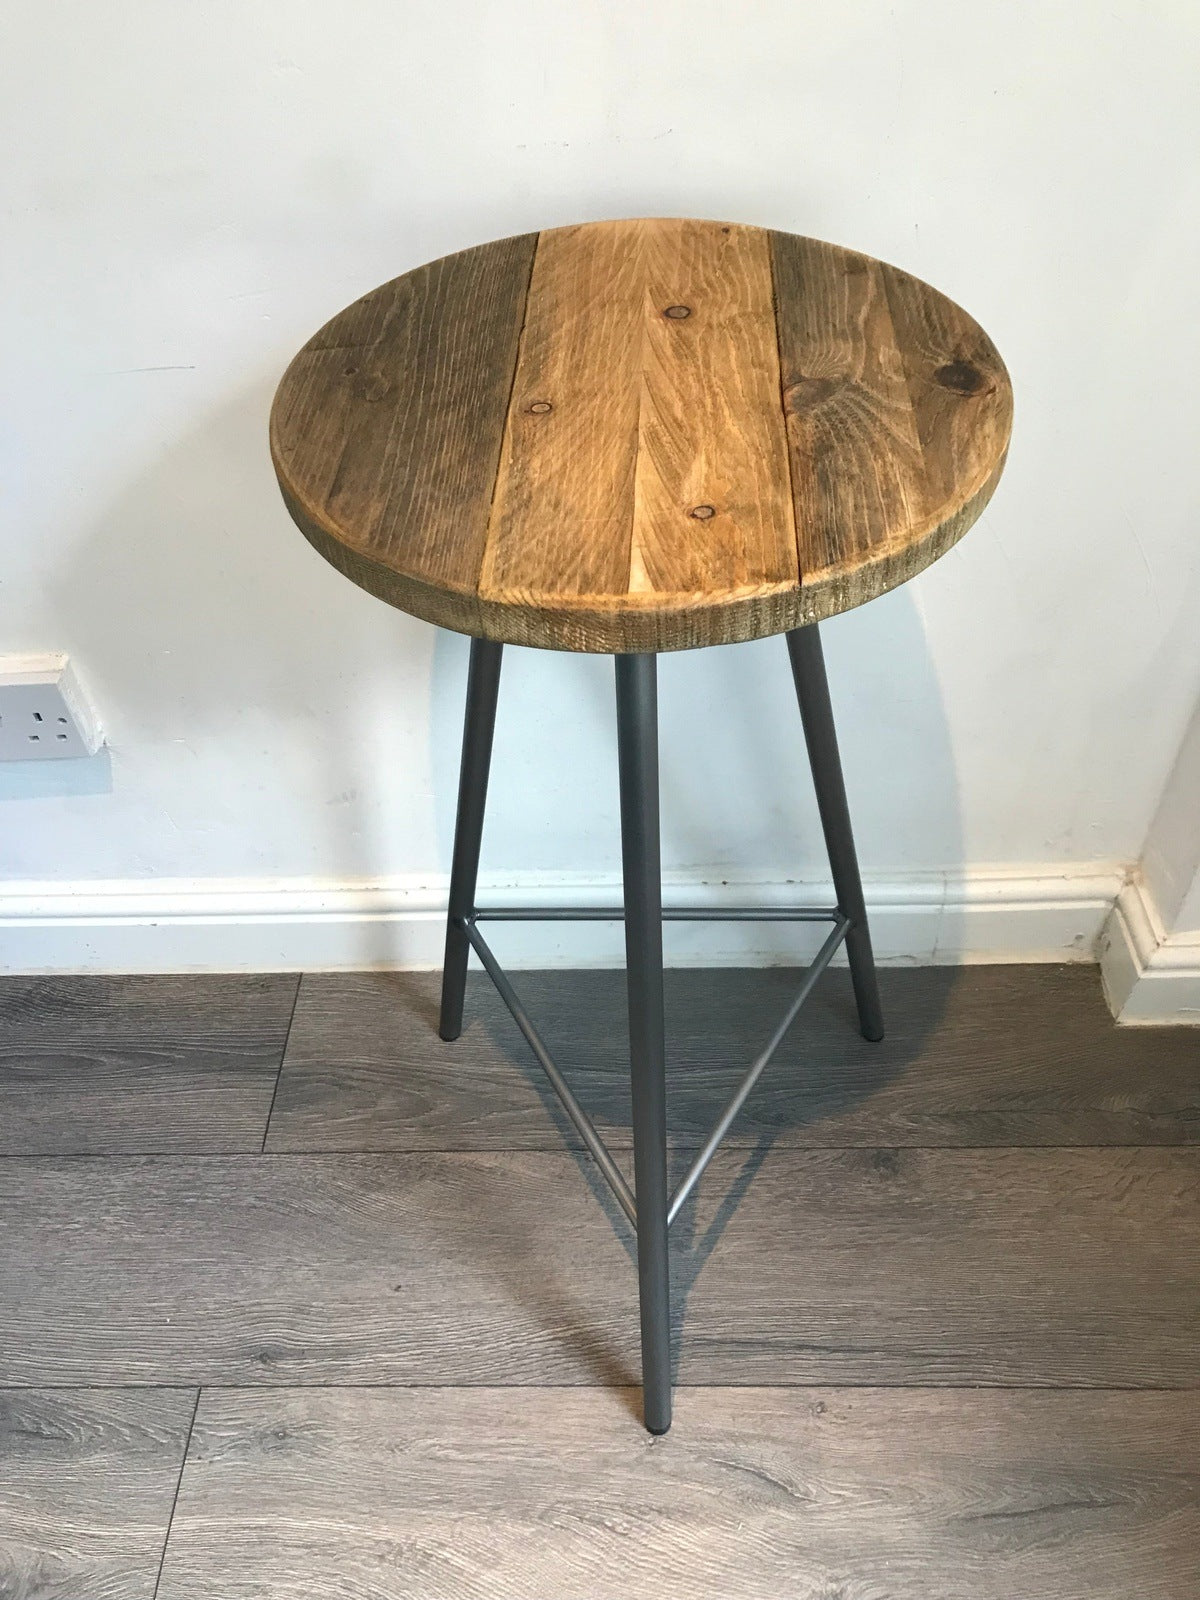 Rustic Hairpin Leg Bar Stool - Breakfast Bar Stool- NORD STOOL - 5 wood finishes - Industrial stool - rustic stool